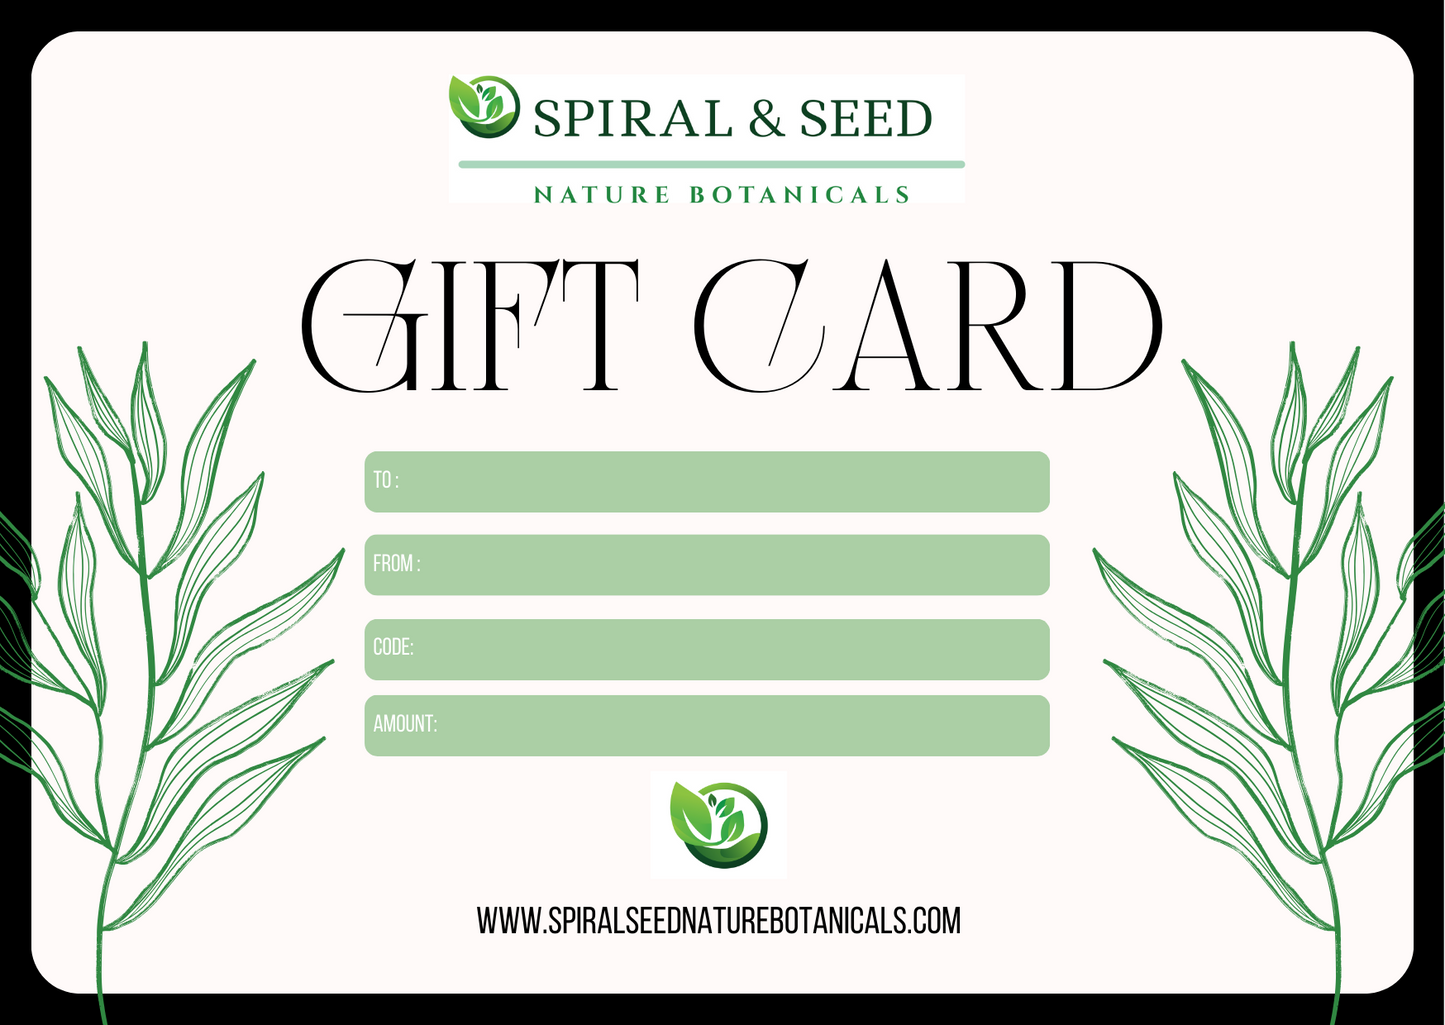 Spiral & Seed Nature Botanicals Gift Card